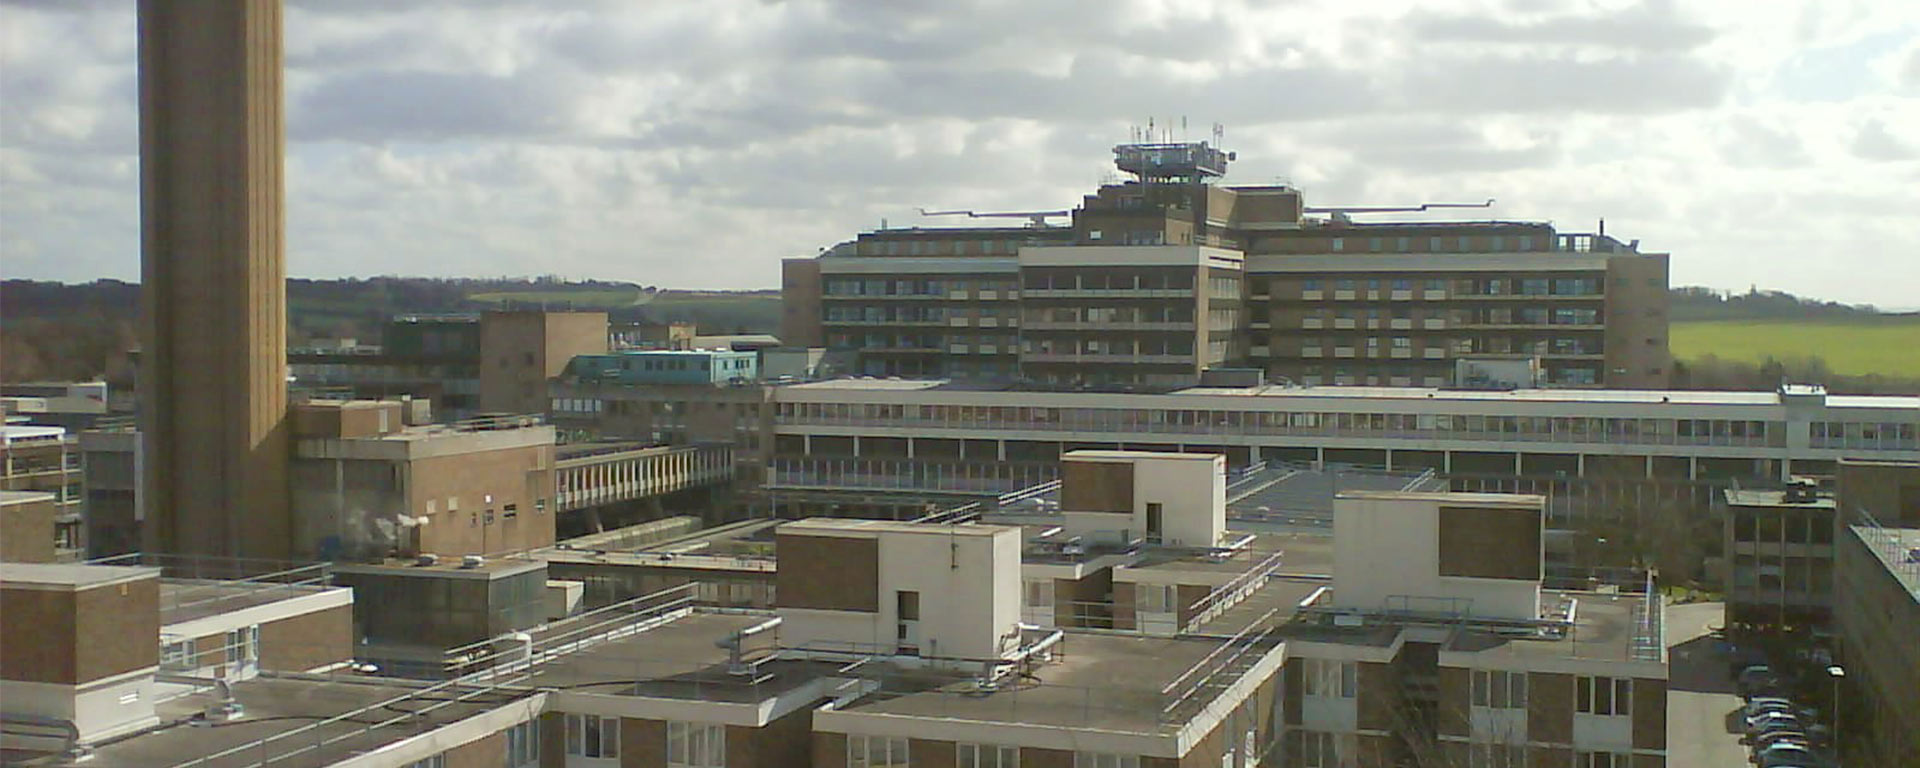 Addenbrookes - Cambridge University Hospital